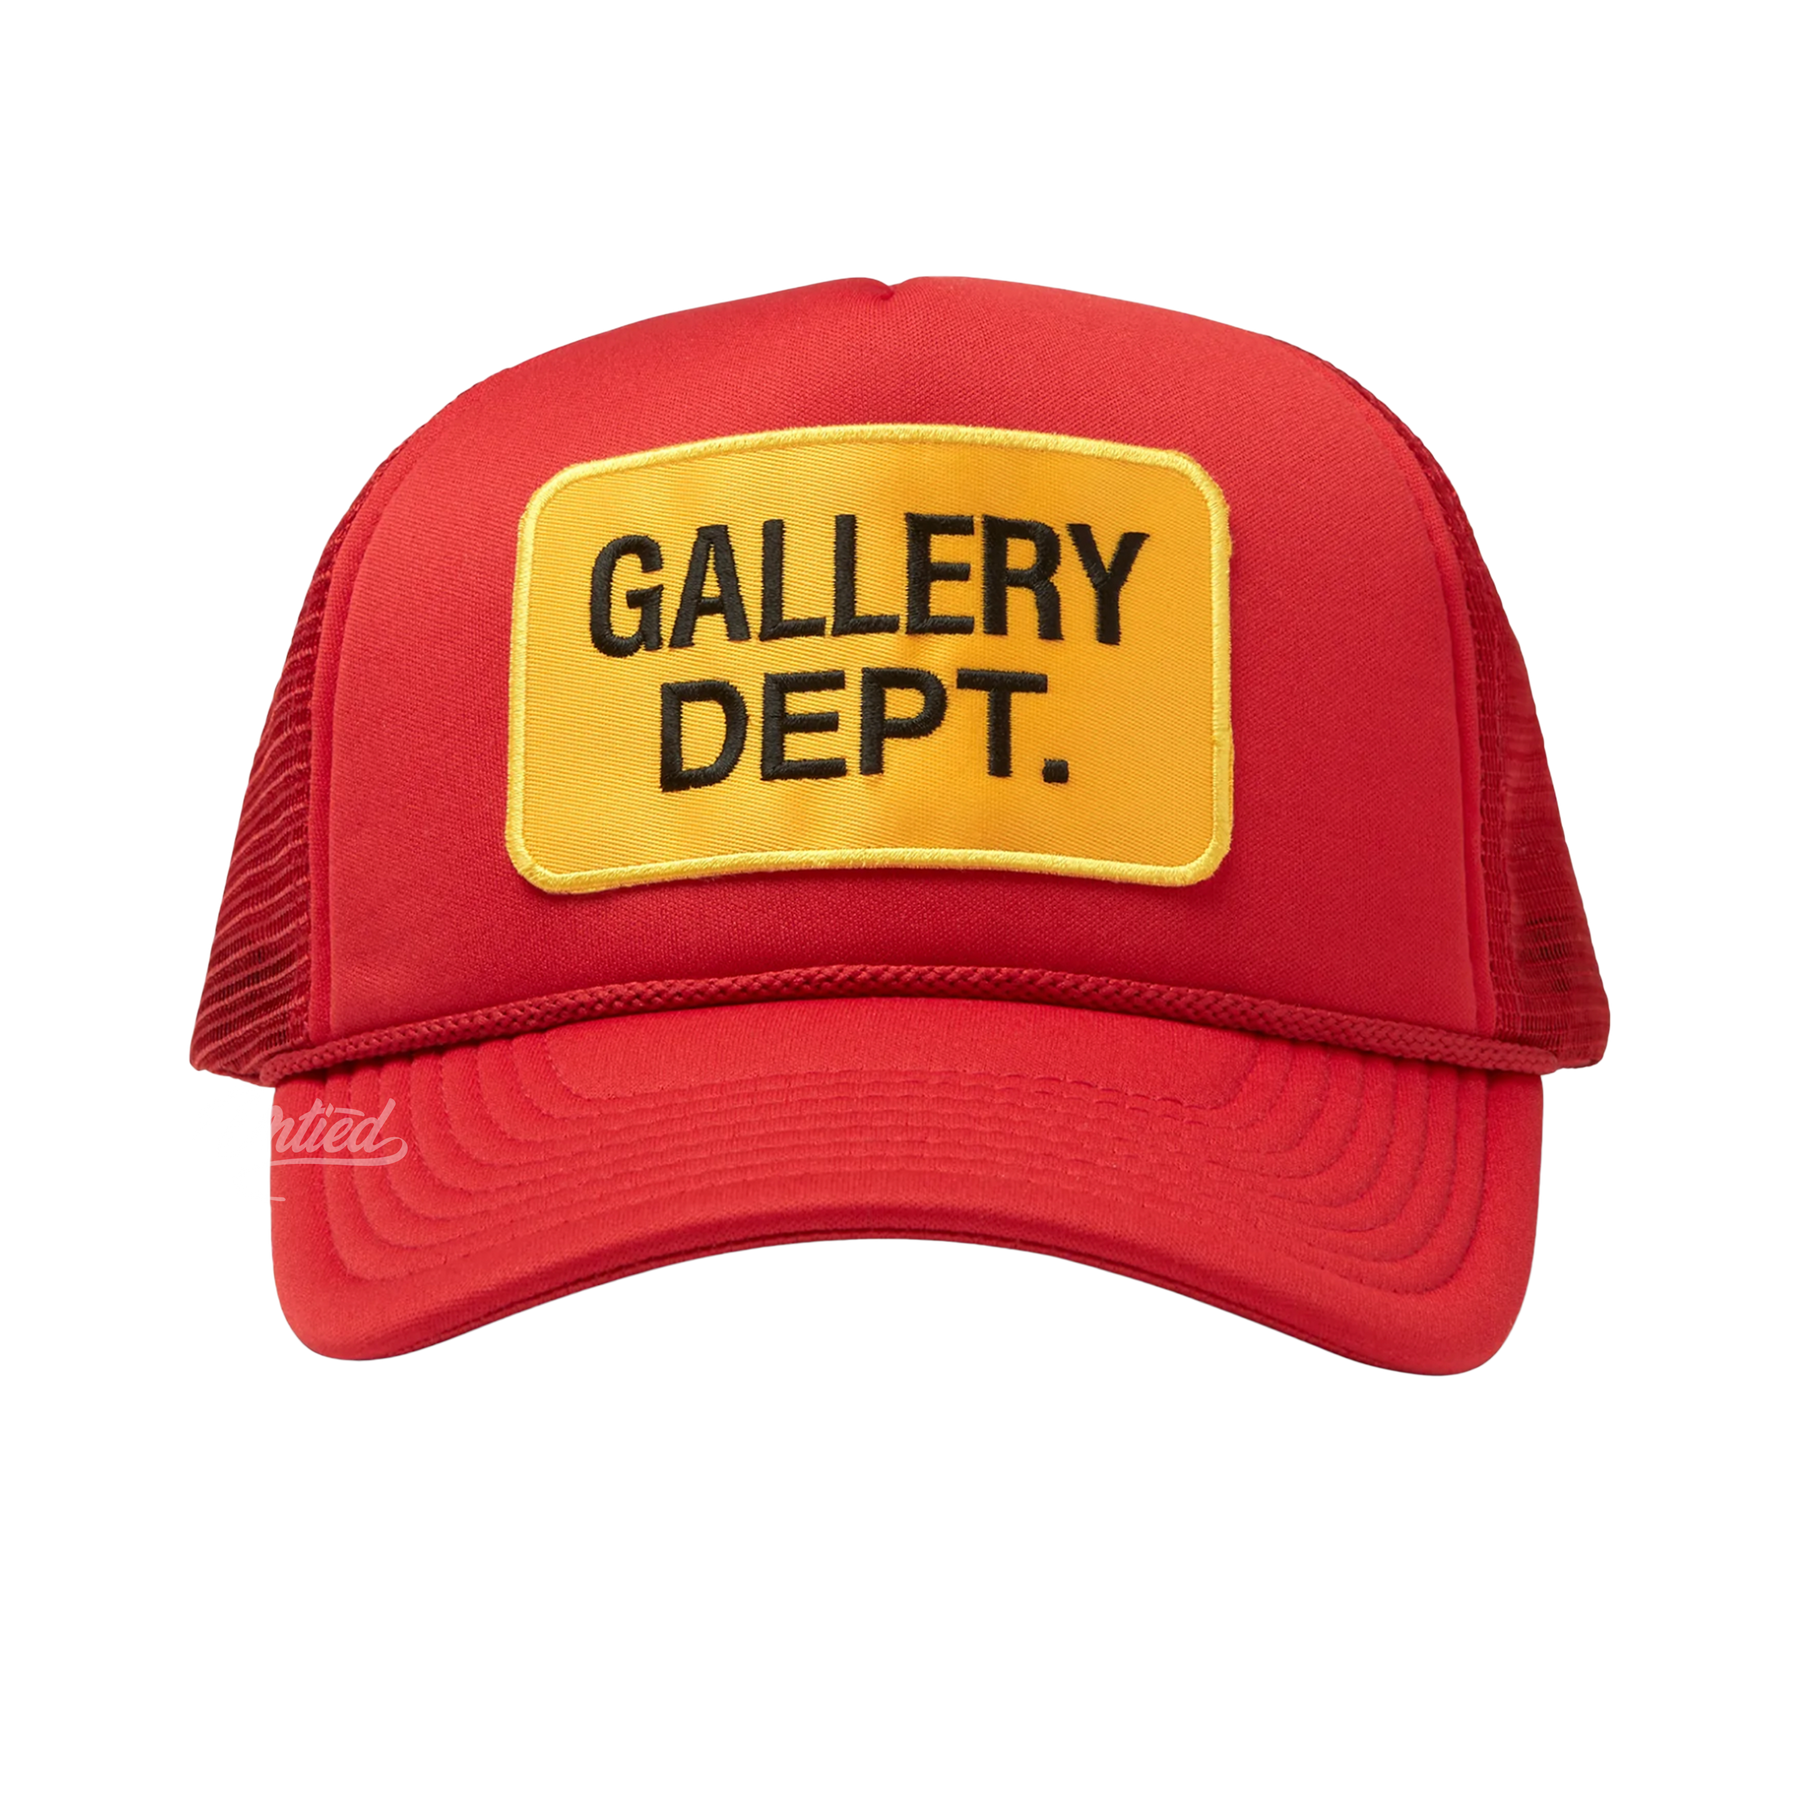 Gallery Dept. Souvenir Trucker Hat 